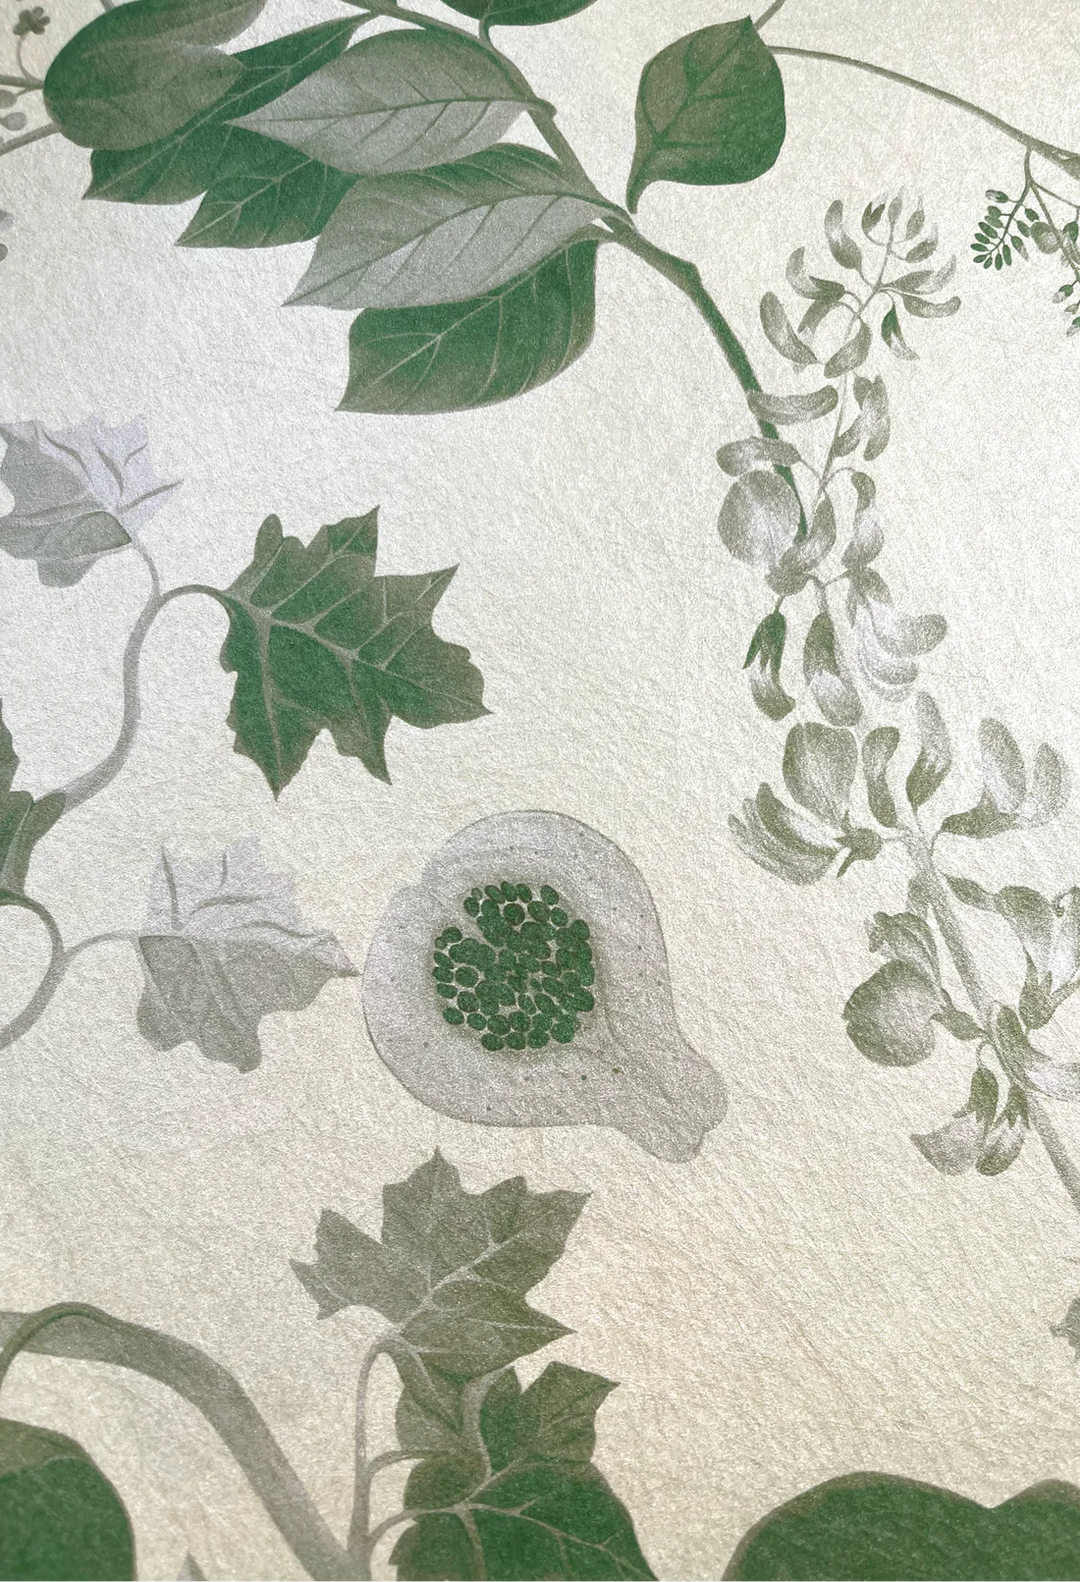 Deus-ex-gardenia-wallpaper-eden-botanical-print-hand-illustrated-exotic-palms-forbidden-fruits-print-fern-green-print-white-background